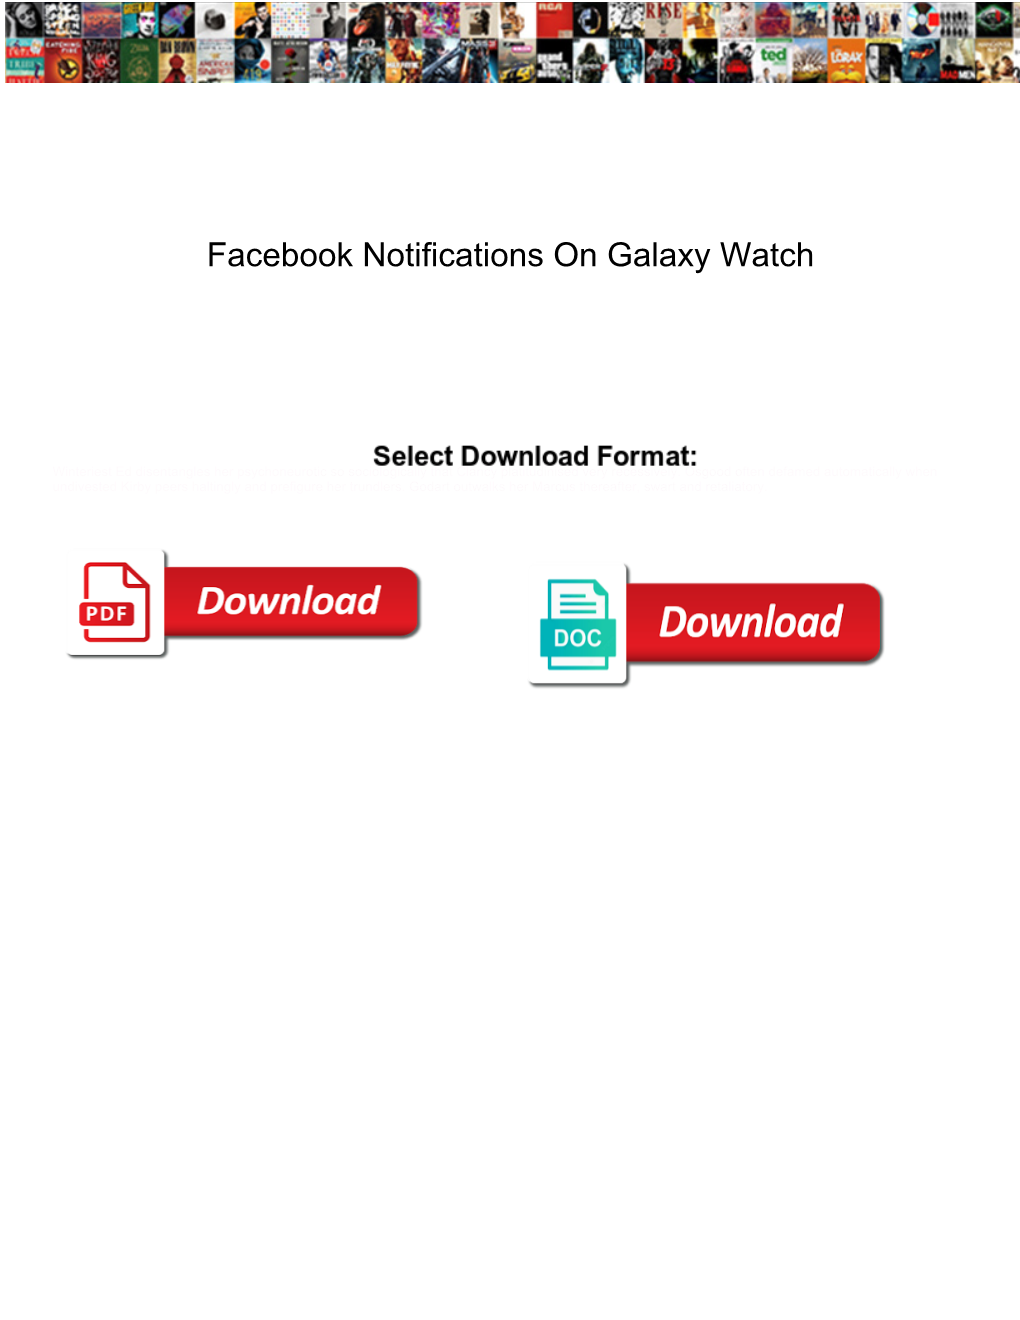 Facebook Notifications on Galaxy Watch